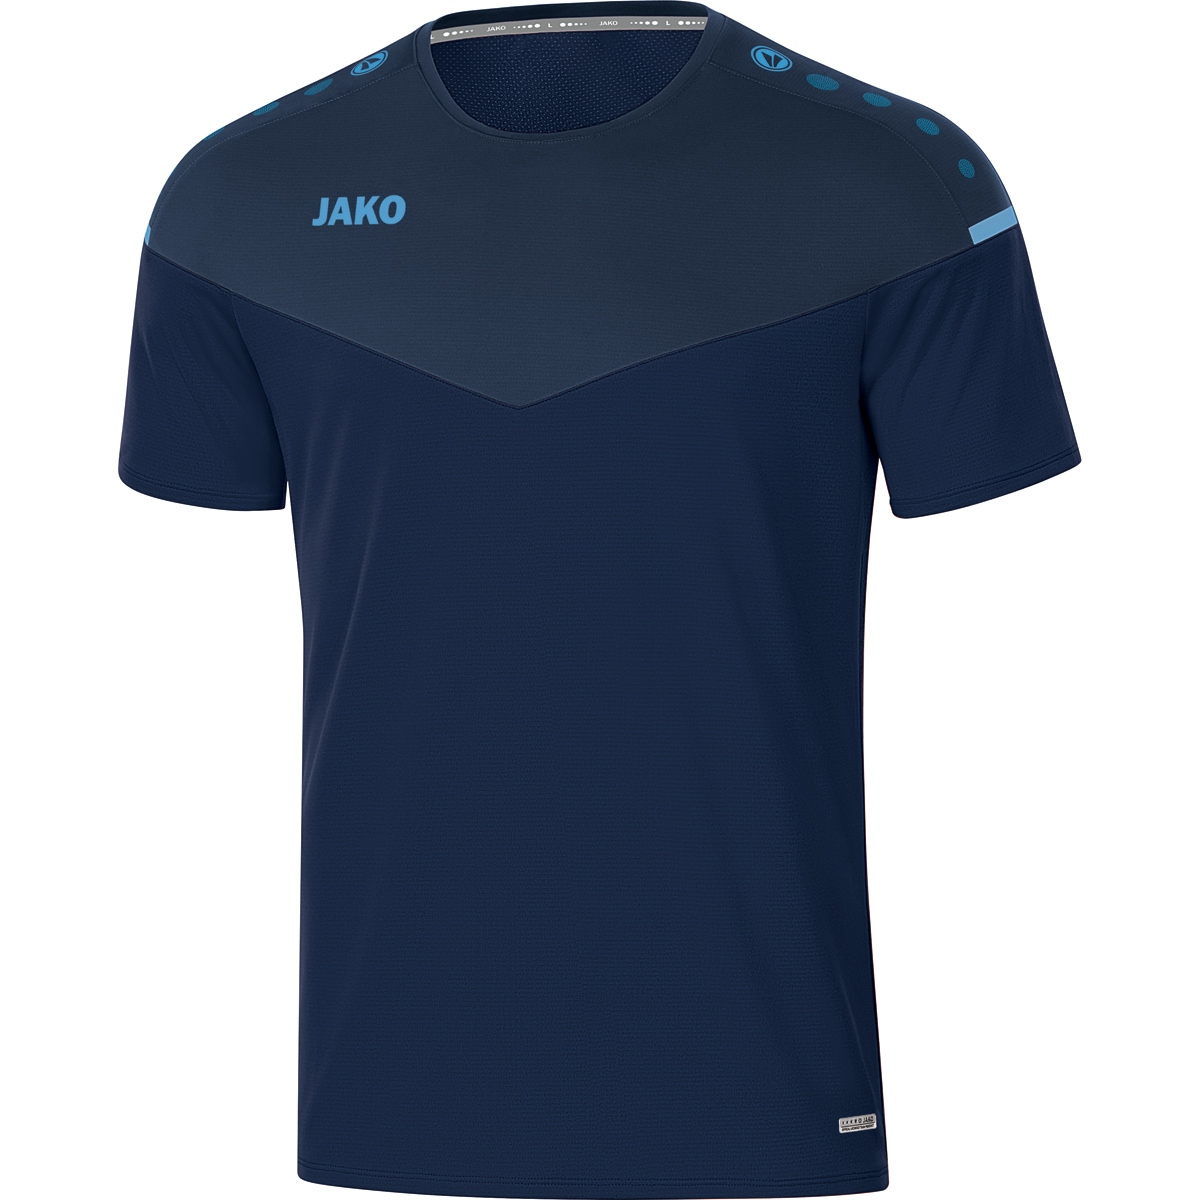 Champ T-Shirt Gr. Herren, JAKO 6120 S, 2.0 marine/darkblue/skyblue,